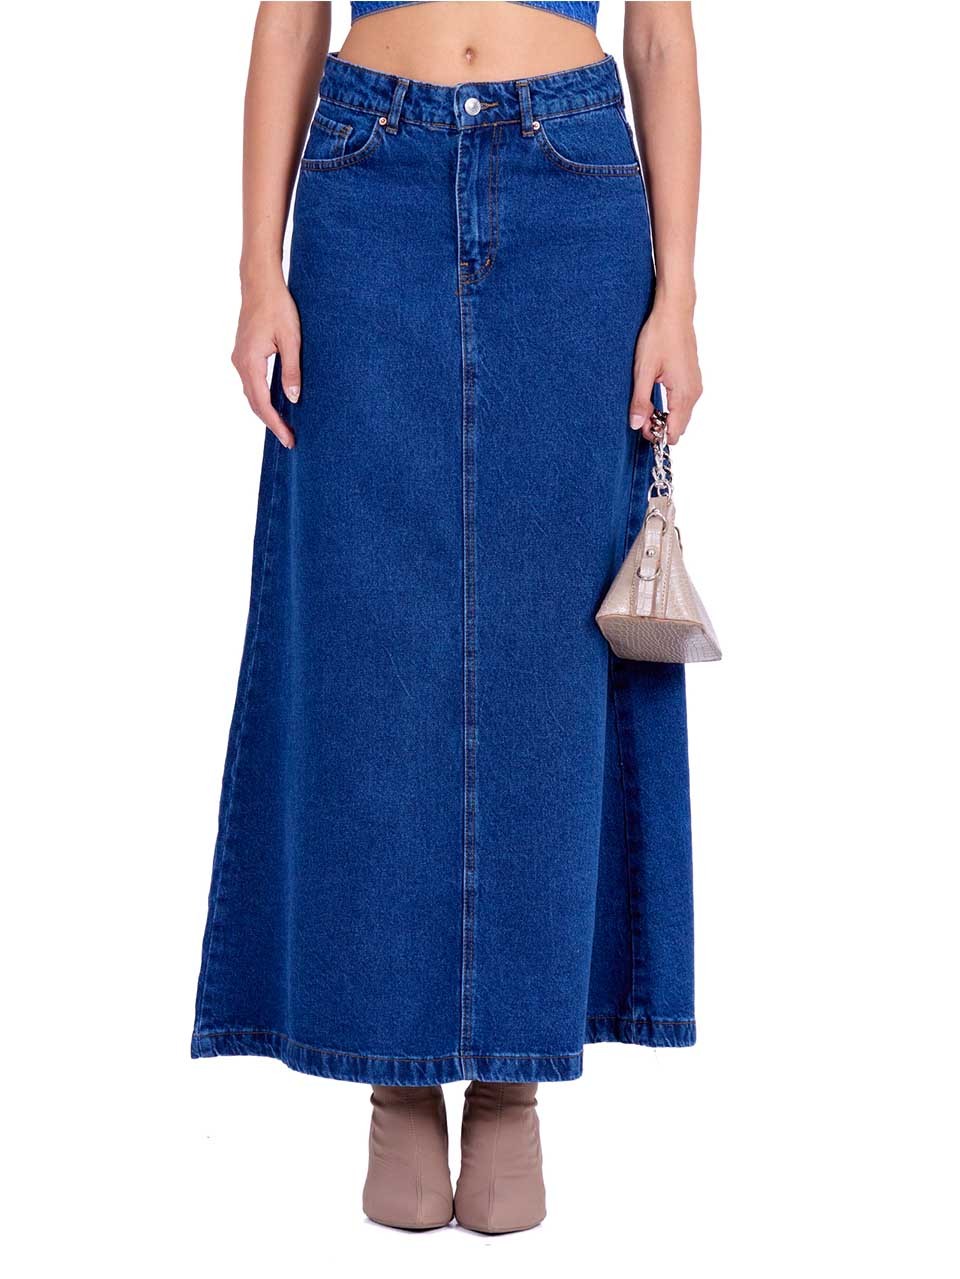 Dark Blue Denim Skirt Maxi 